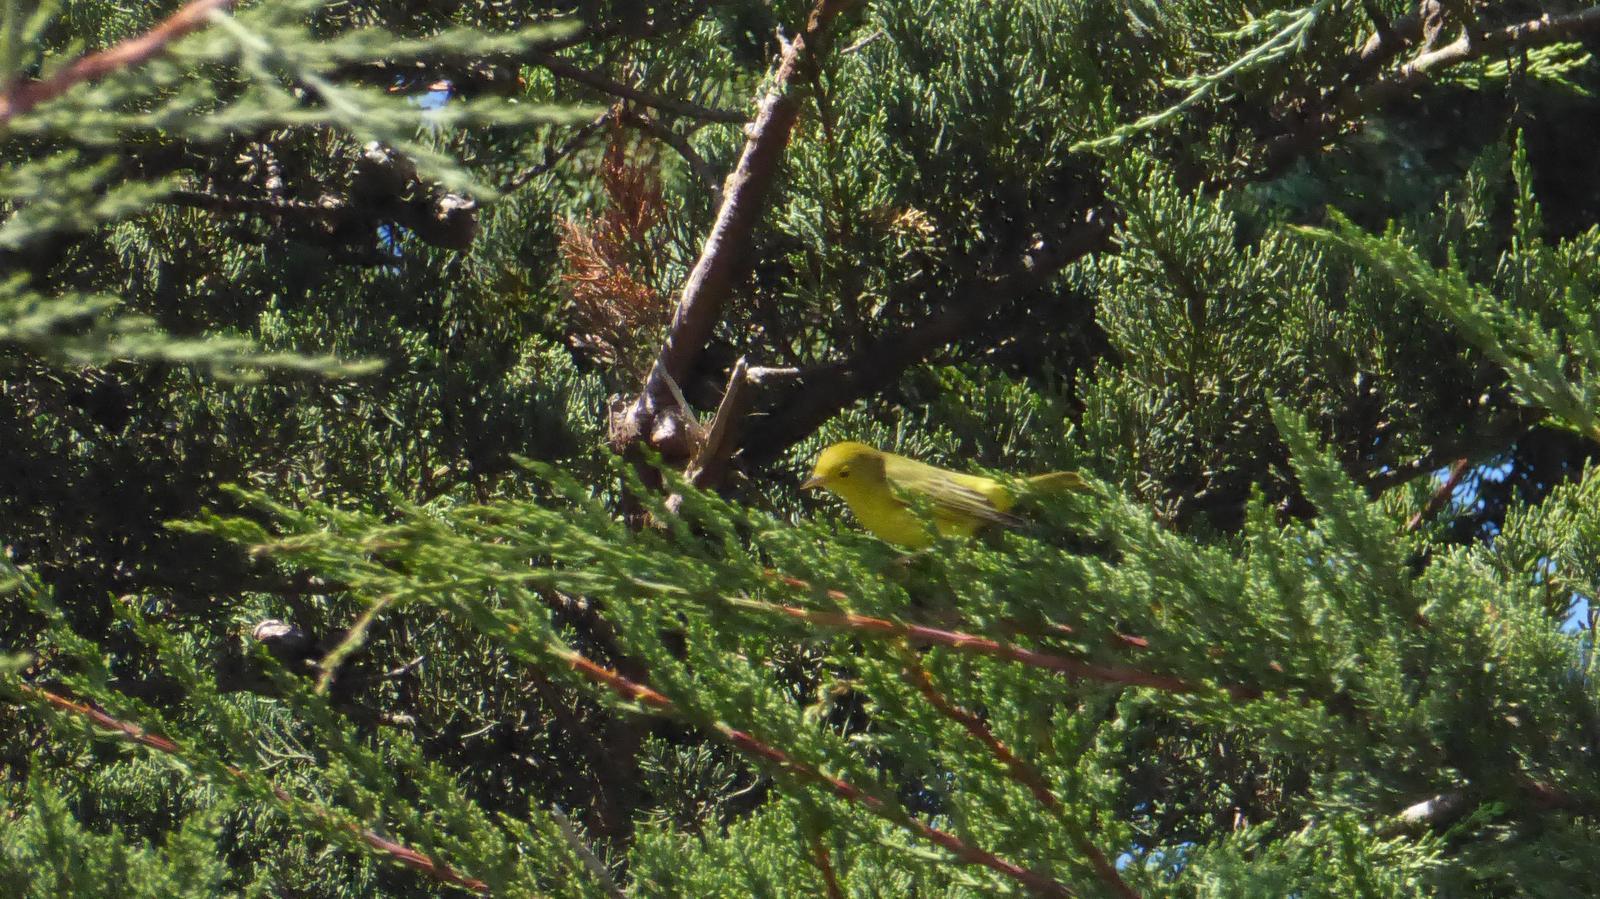 Yellow Warbler Photo by Daliel Leite